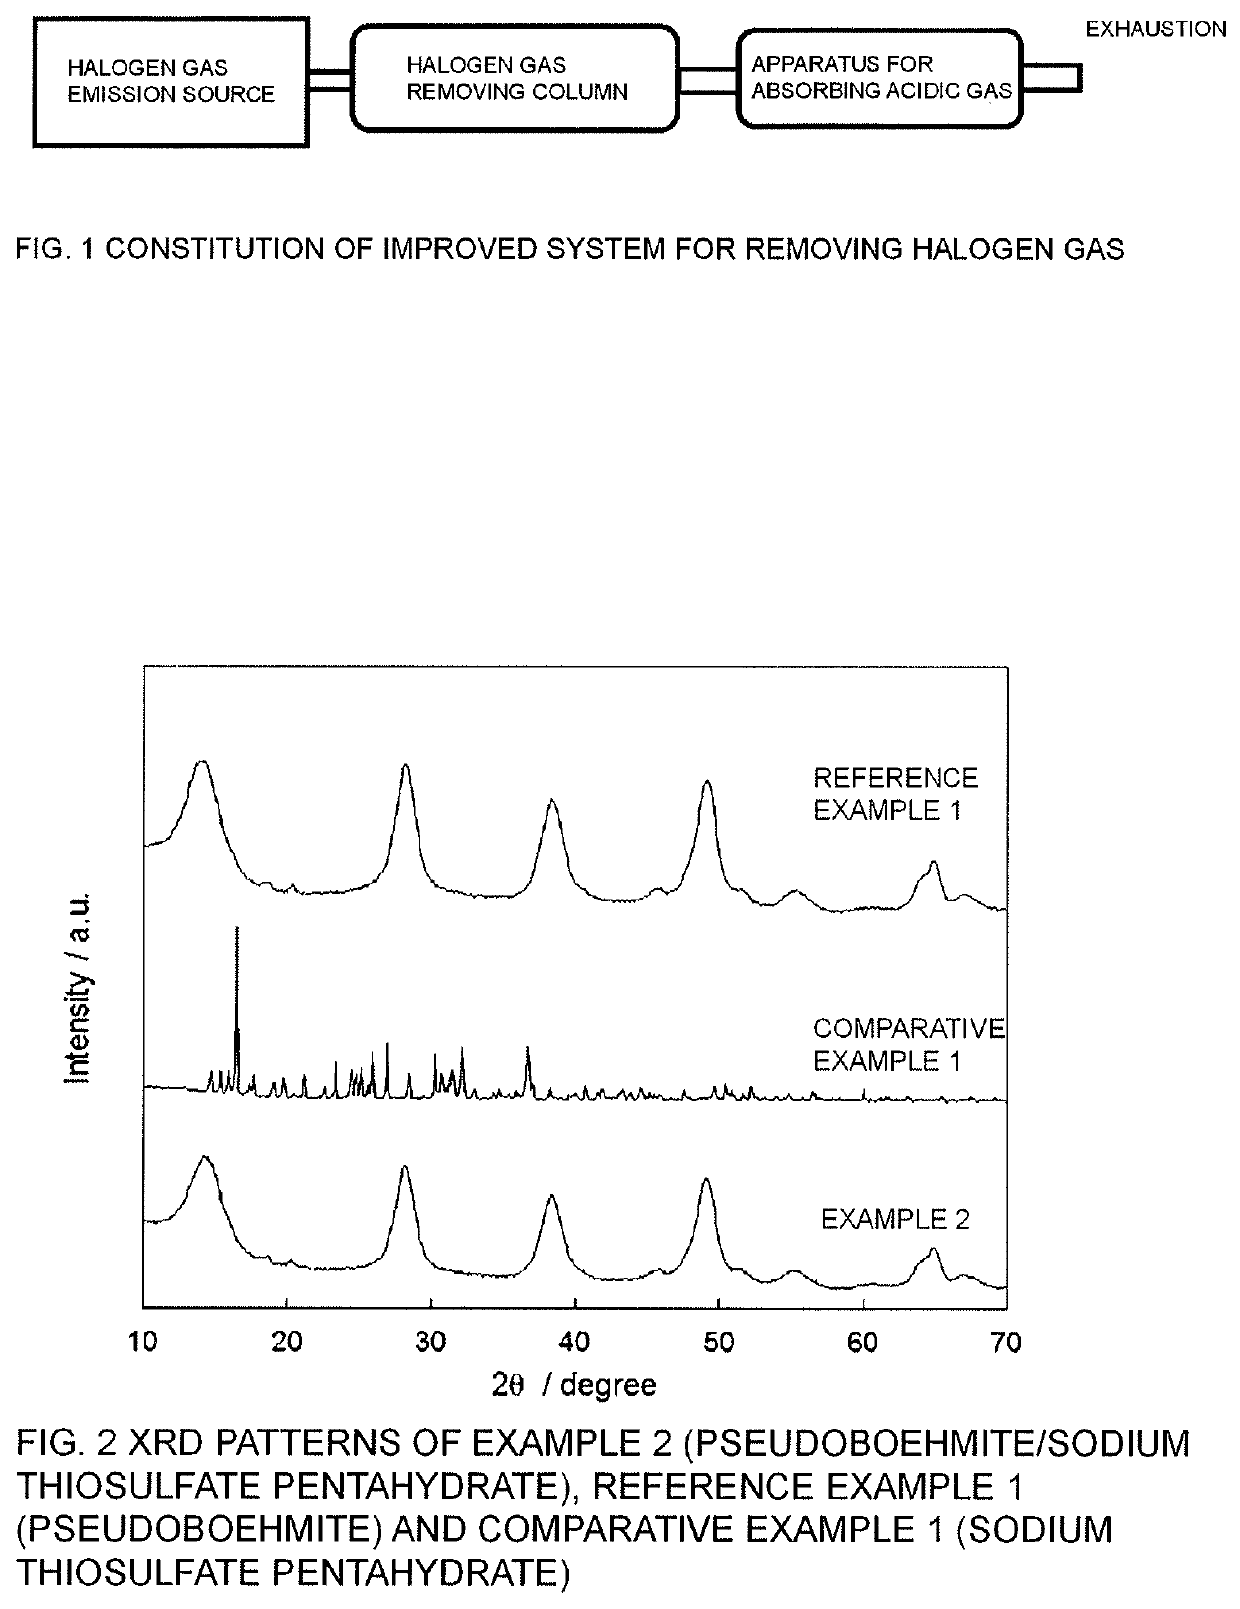 Agent for removing halogen gas, method for producing same, method for removing halogen gas with use of same, and system for removing halogen gas